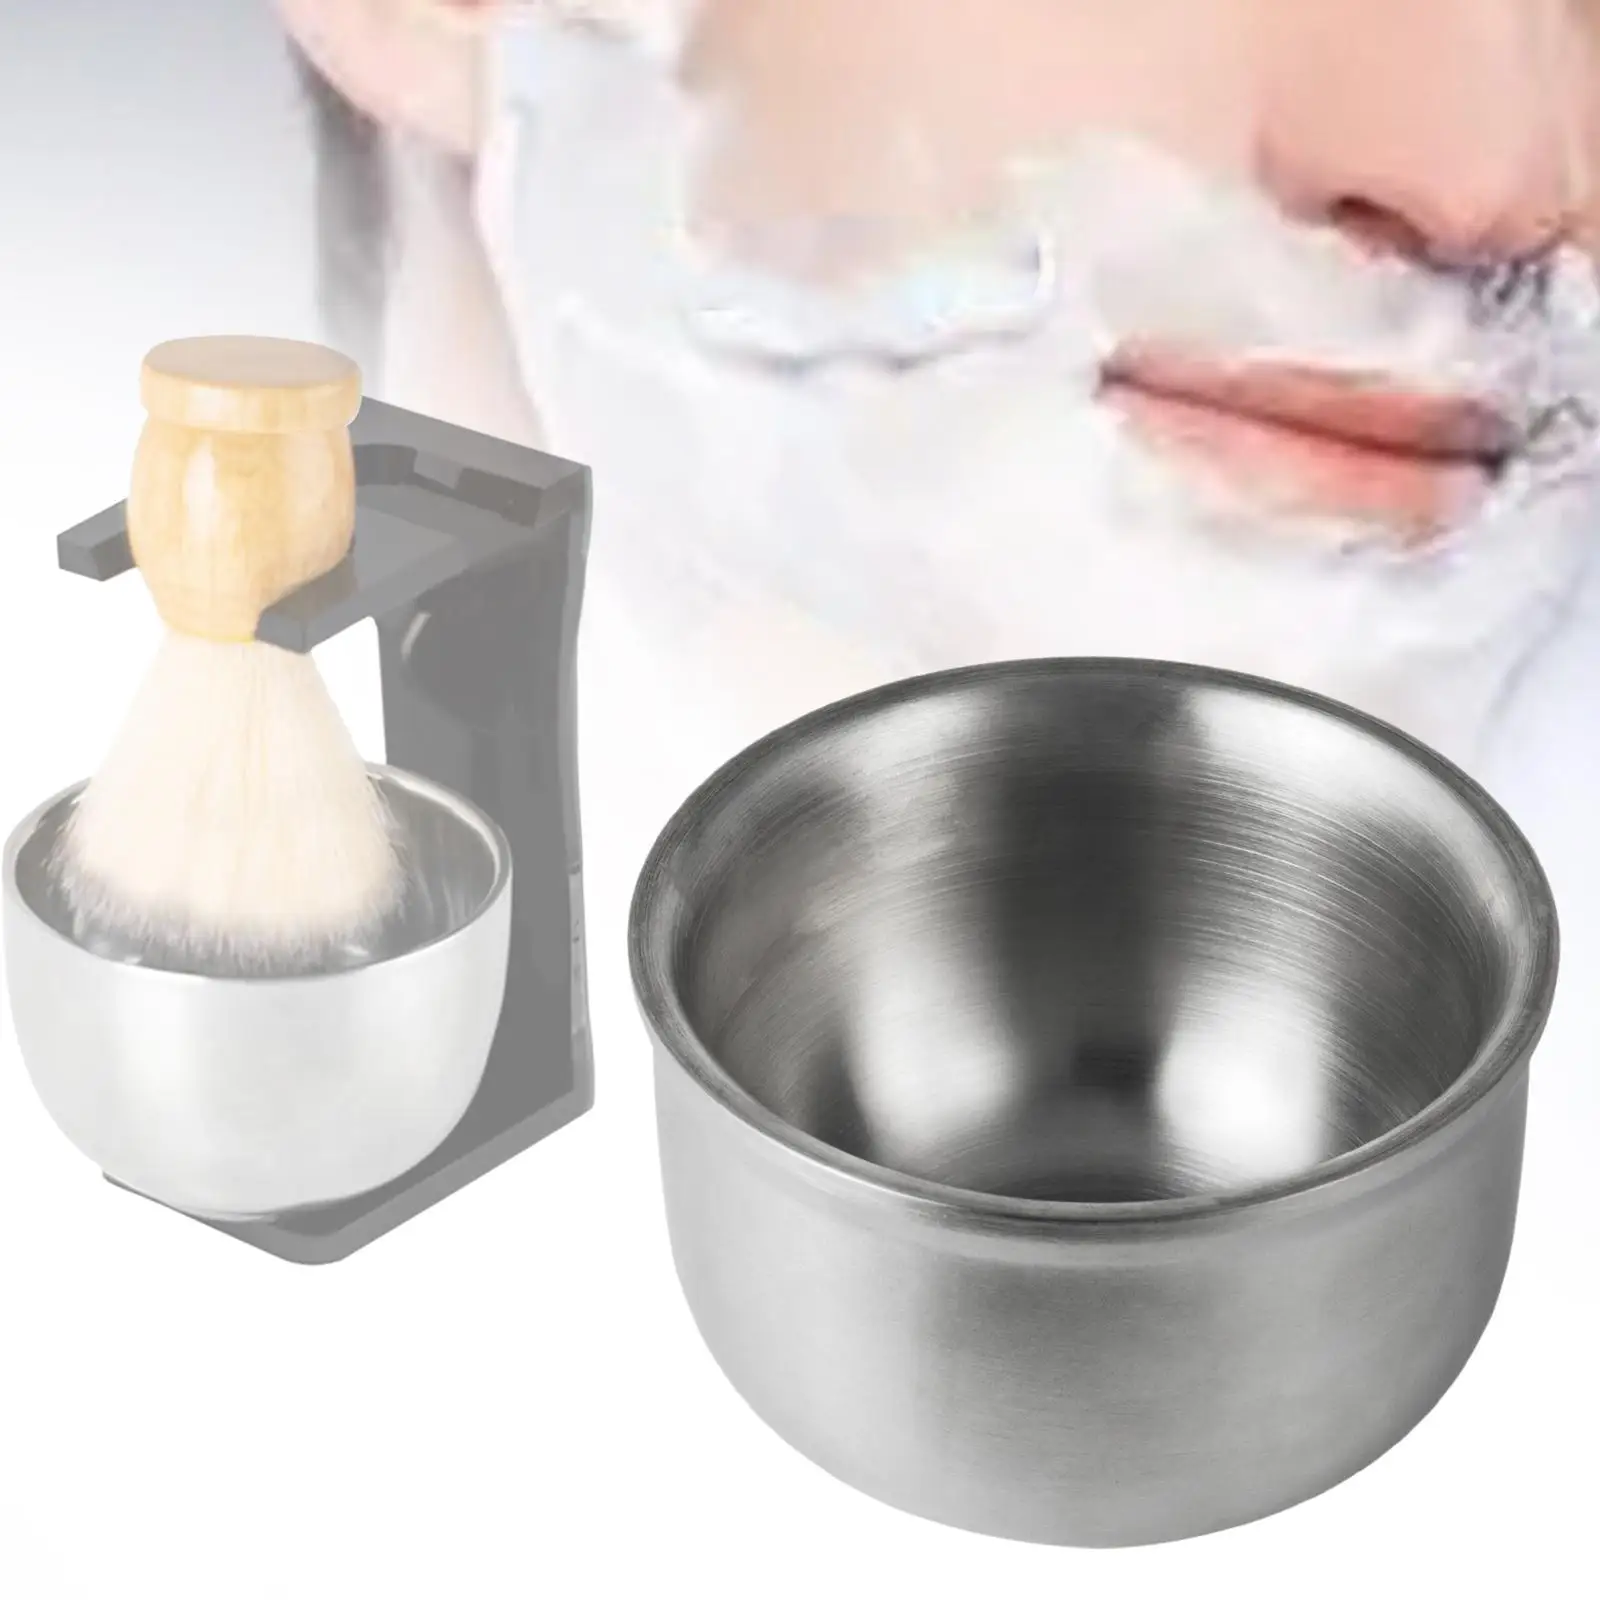 Shaving Soap Bowl Produce Rich Foam Heat Insulation Shaving Cup for Men Gift